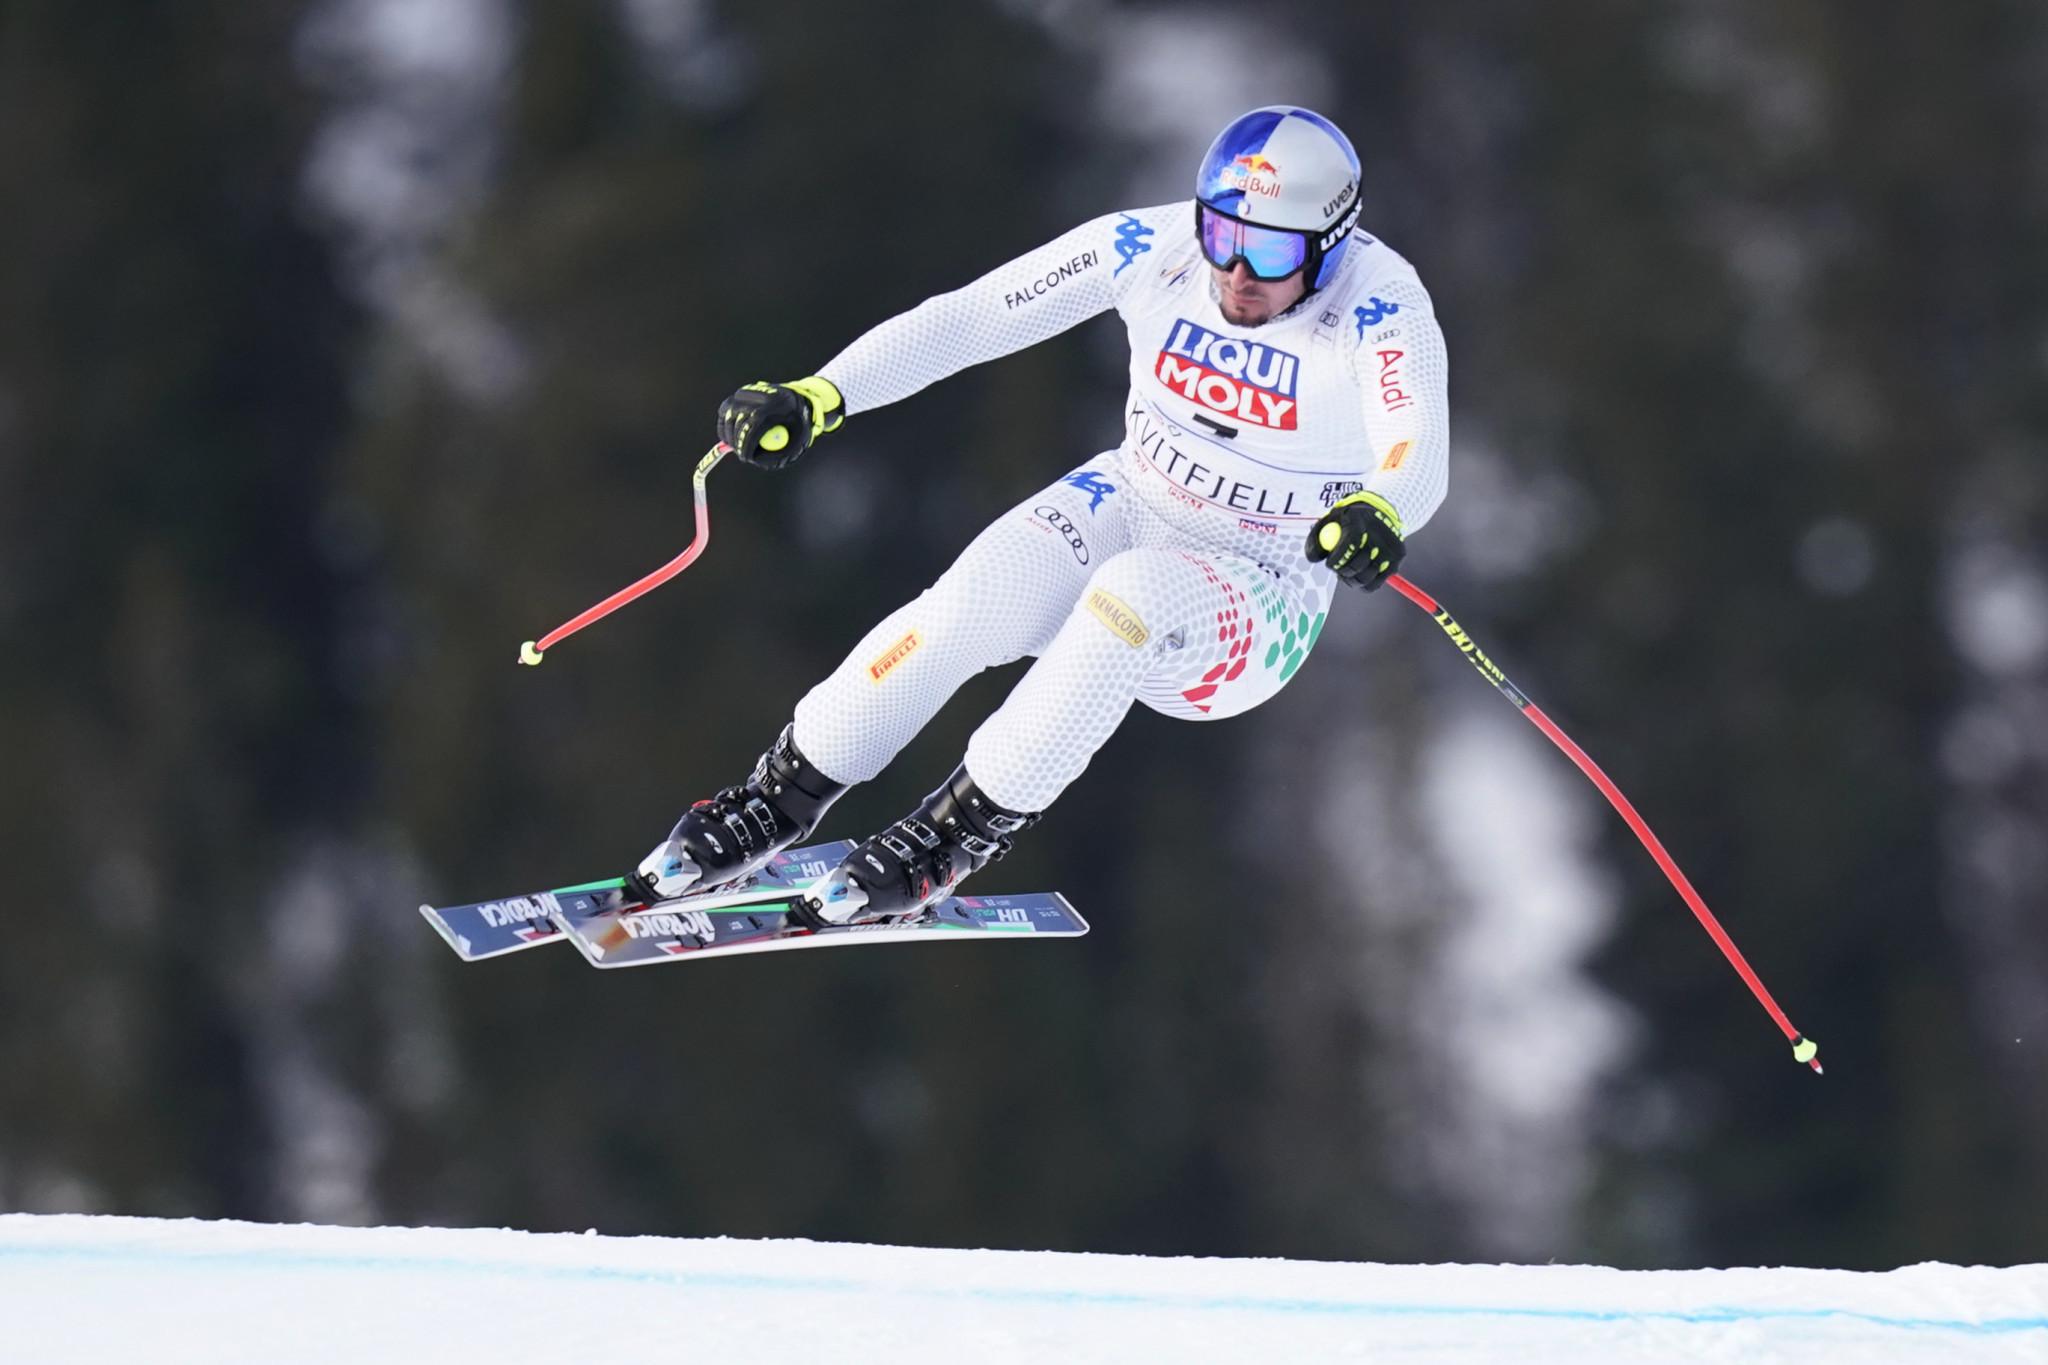 Italy's Dominik Paris won today's downhill in Kvitfjell ©Getty Images